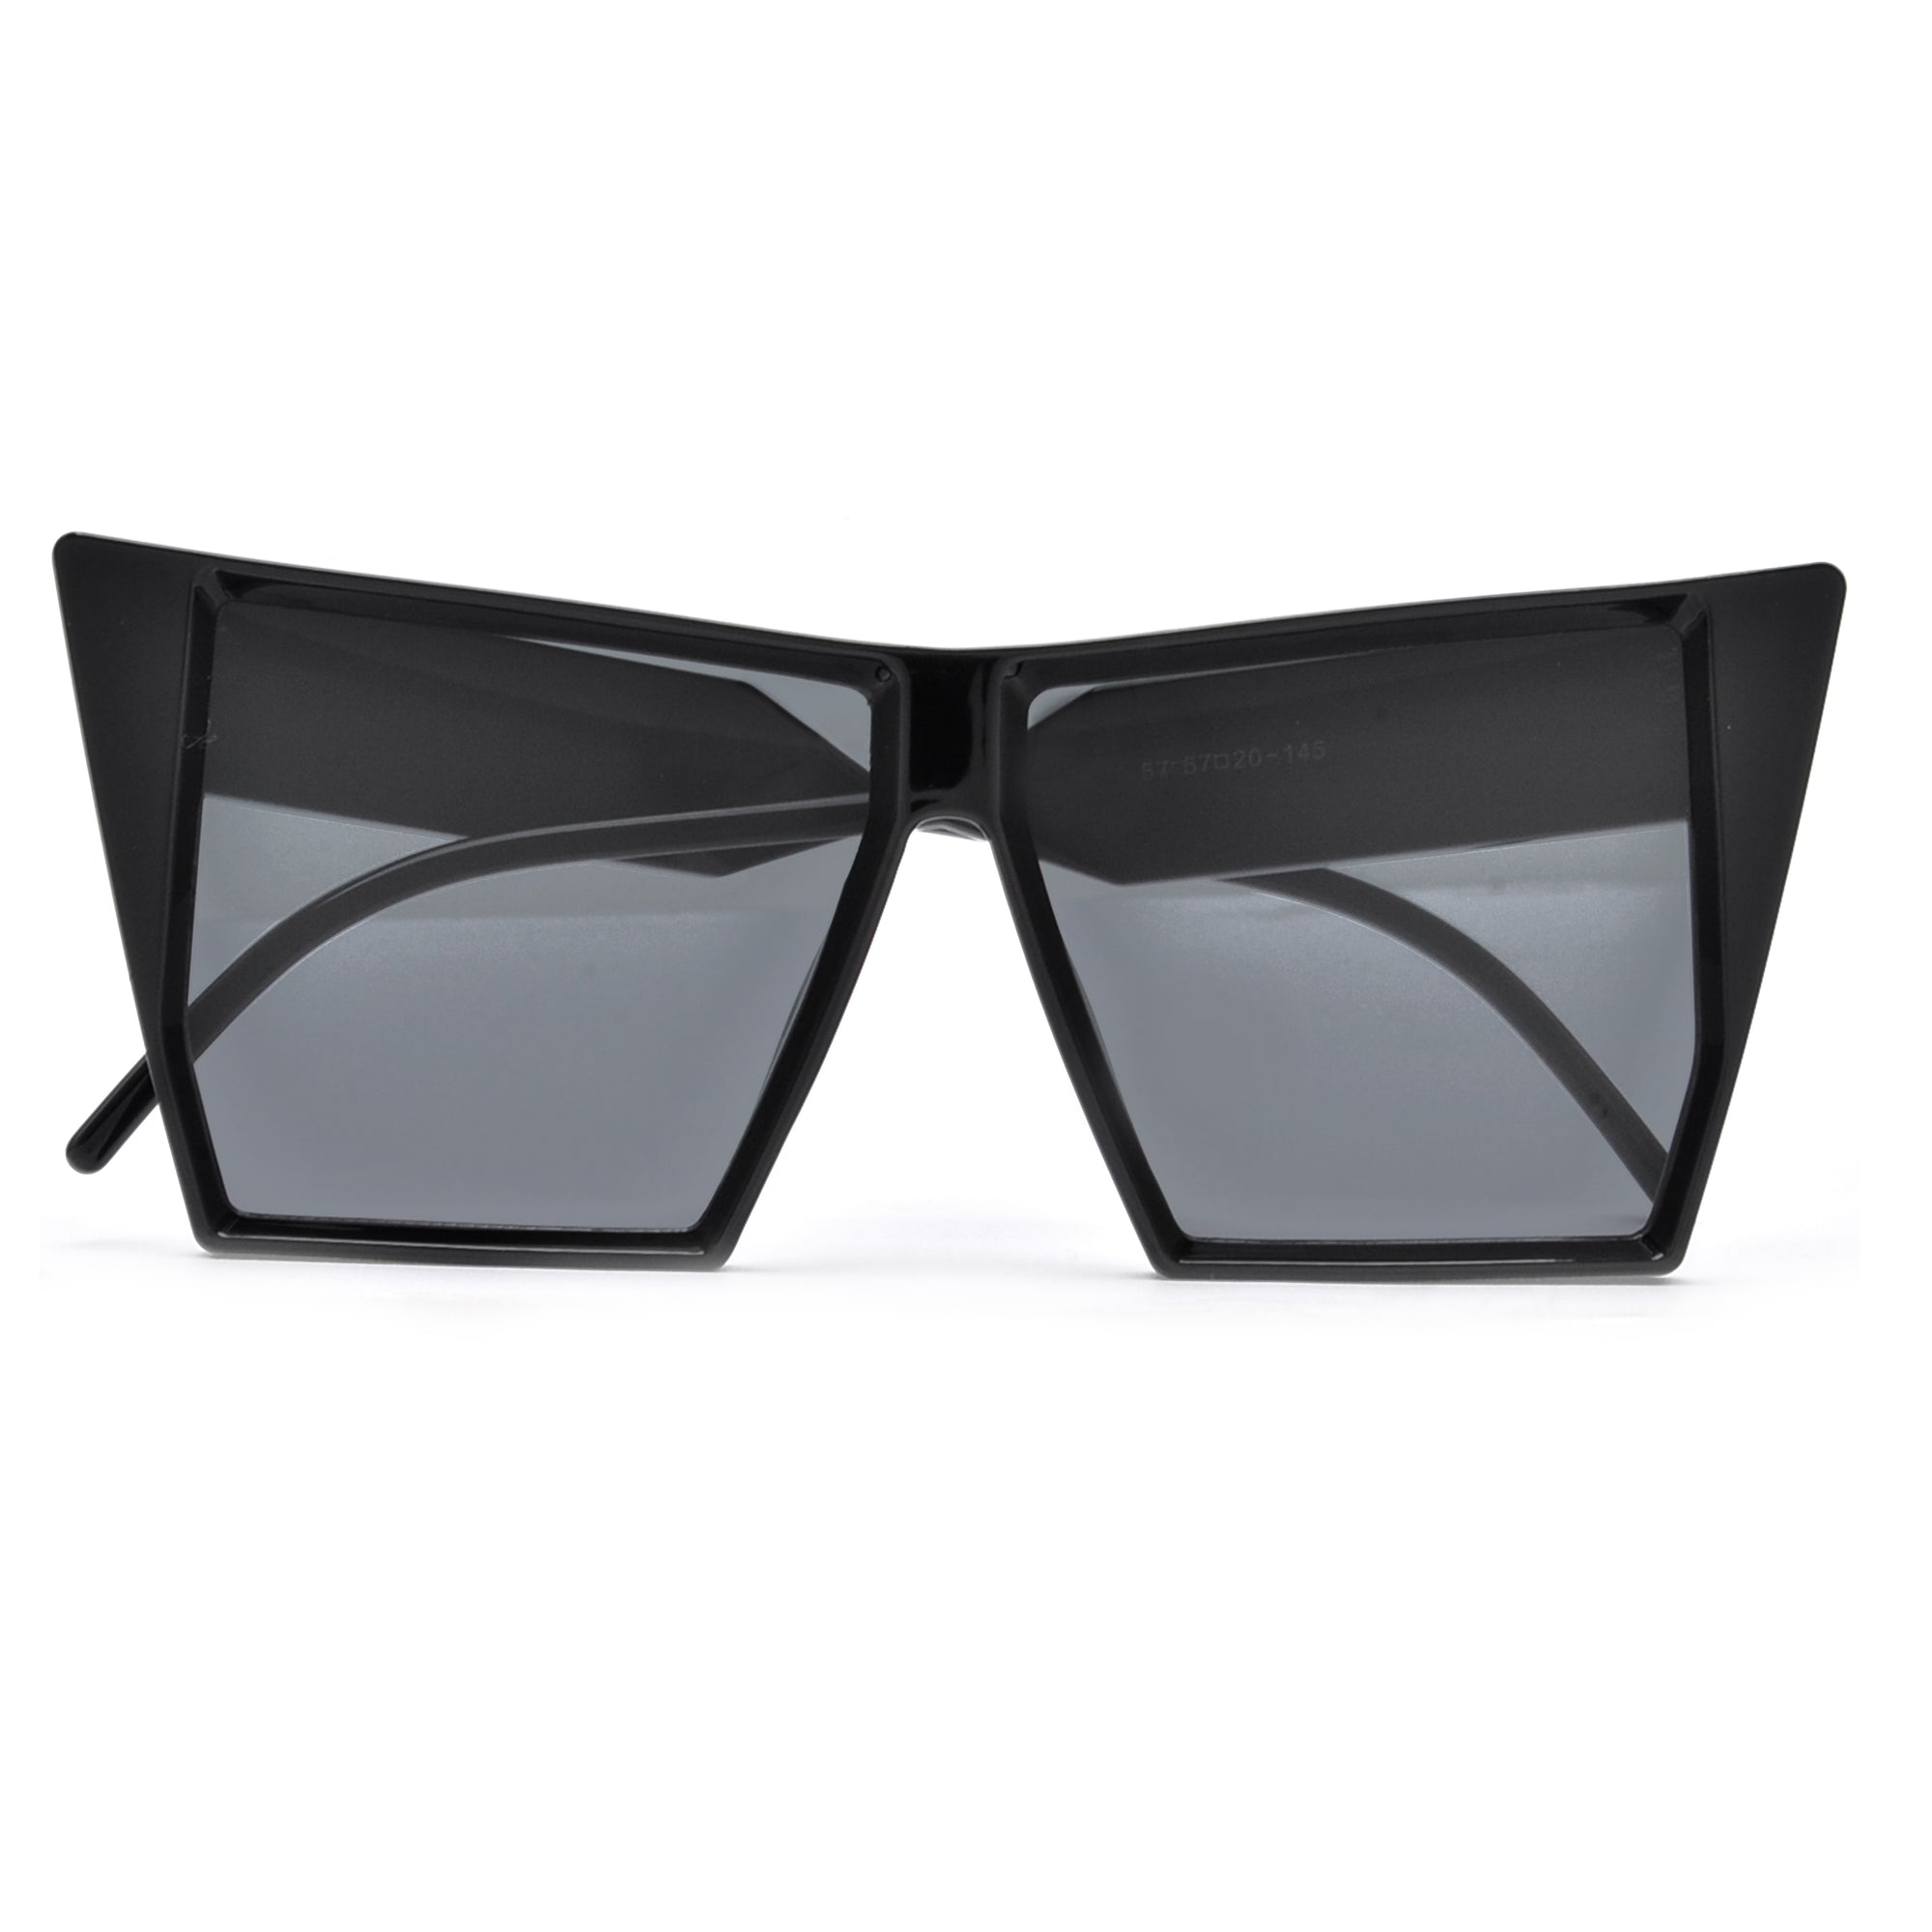 All Black Square Cat Eye Sunglasses